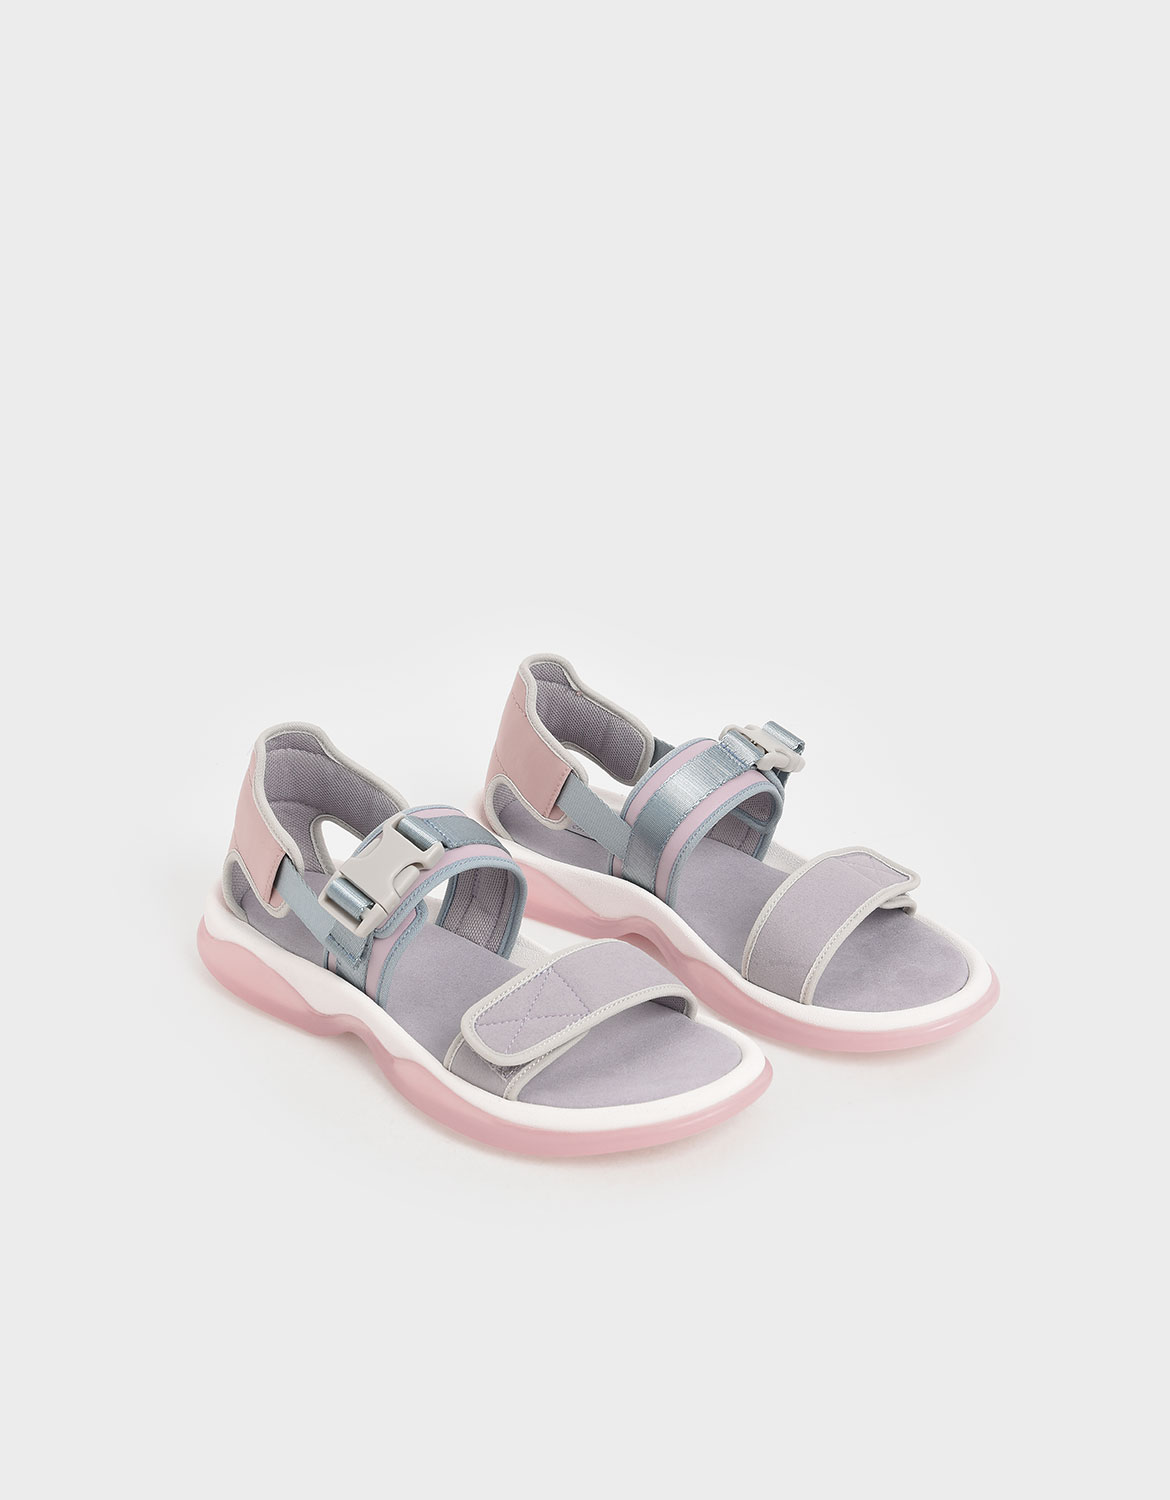 Women’s lilac lycra & microsuede sandals